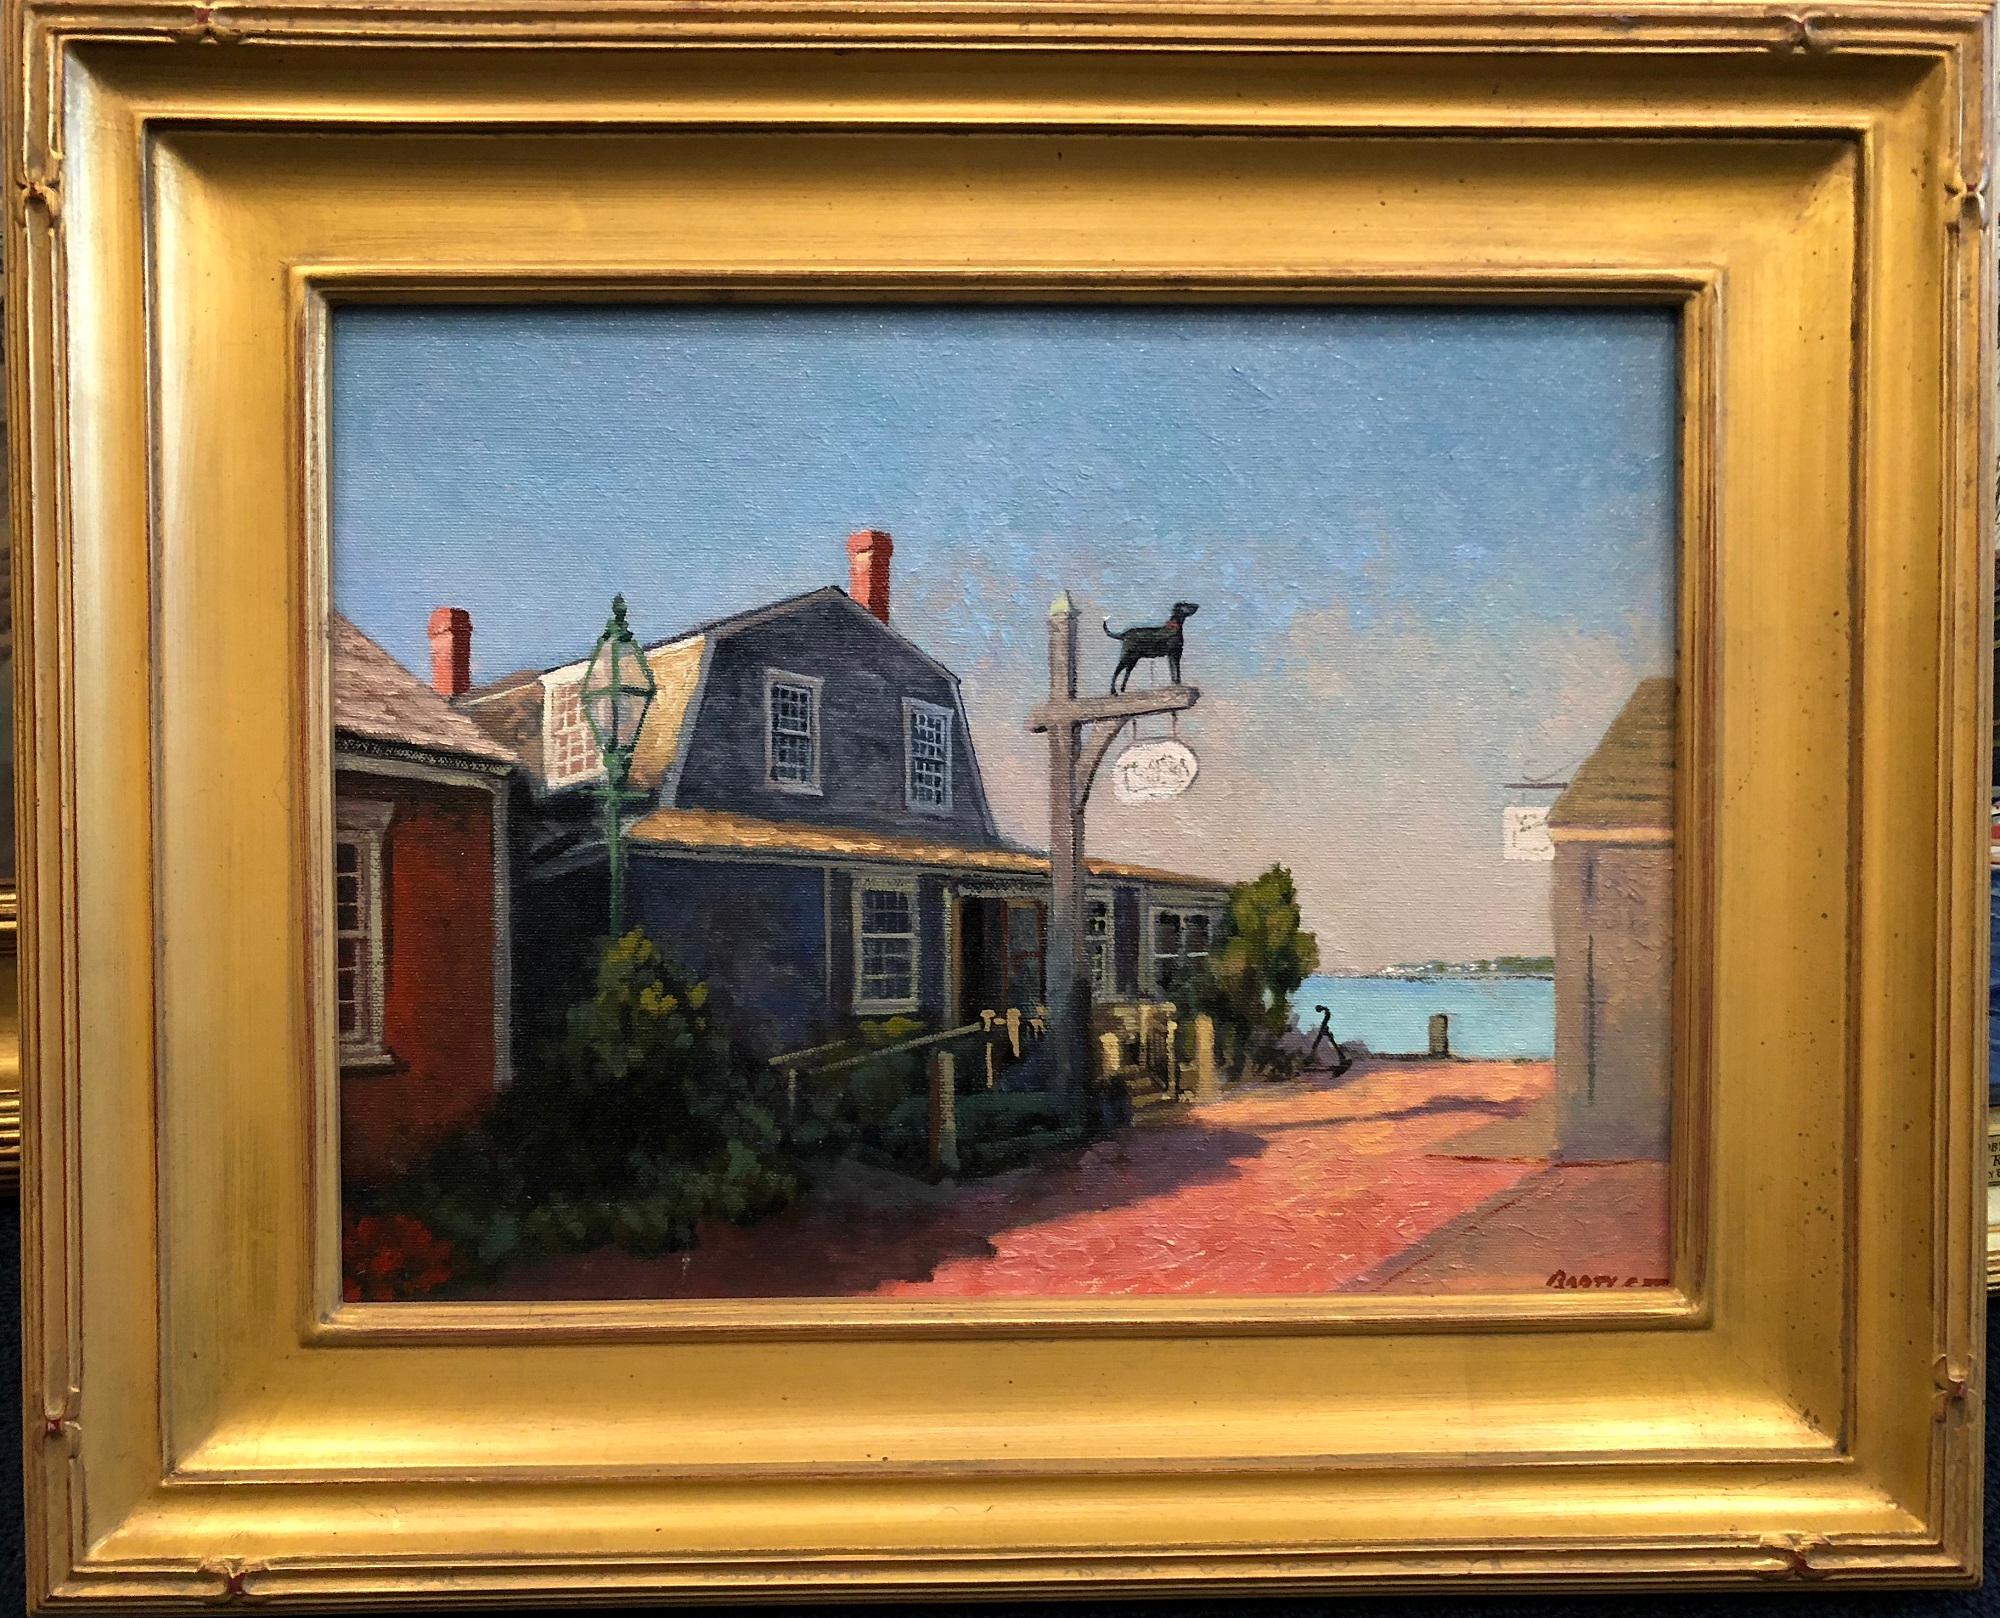 The Black Dog, Martha's Vineyard, Massachusetts - Painting by Harley Bartlett